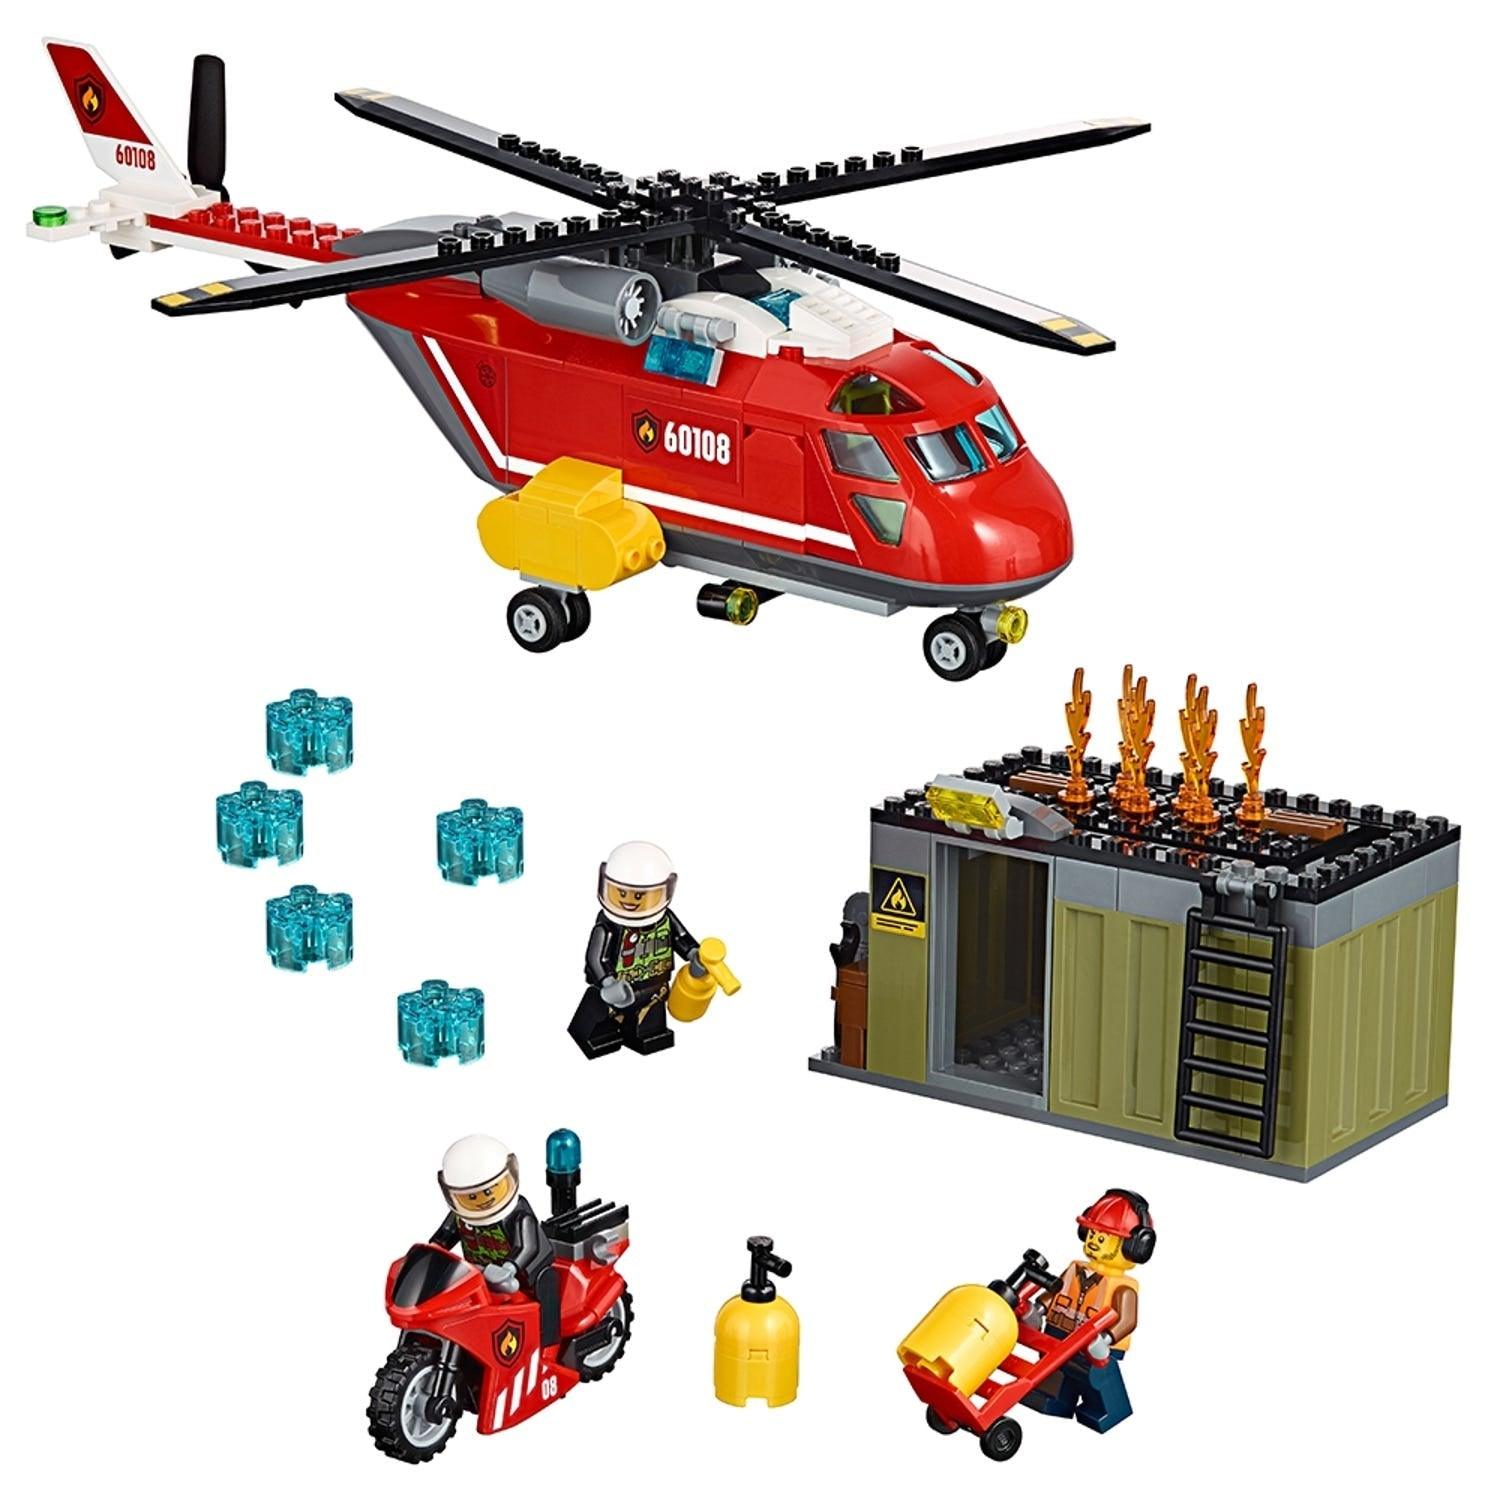 LEGO Fire Response Unit 60108 City LEGO CITY BRANDWEER @ 2TTOYS LEGO €. 39.99